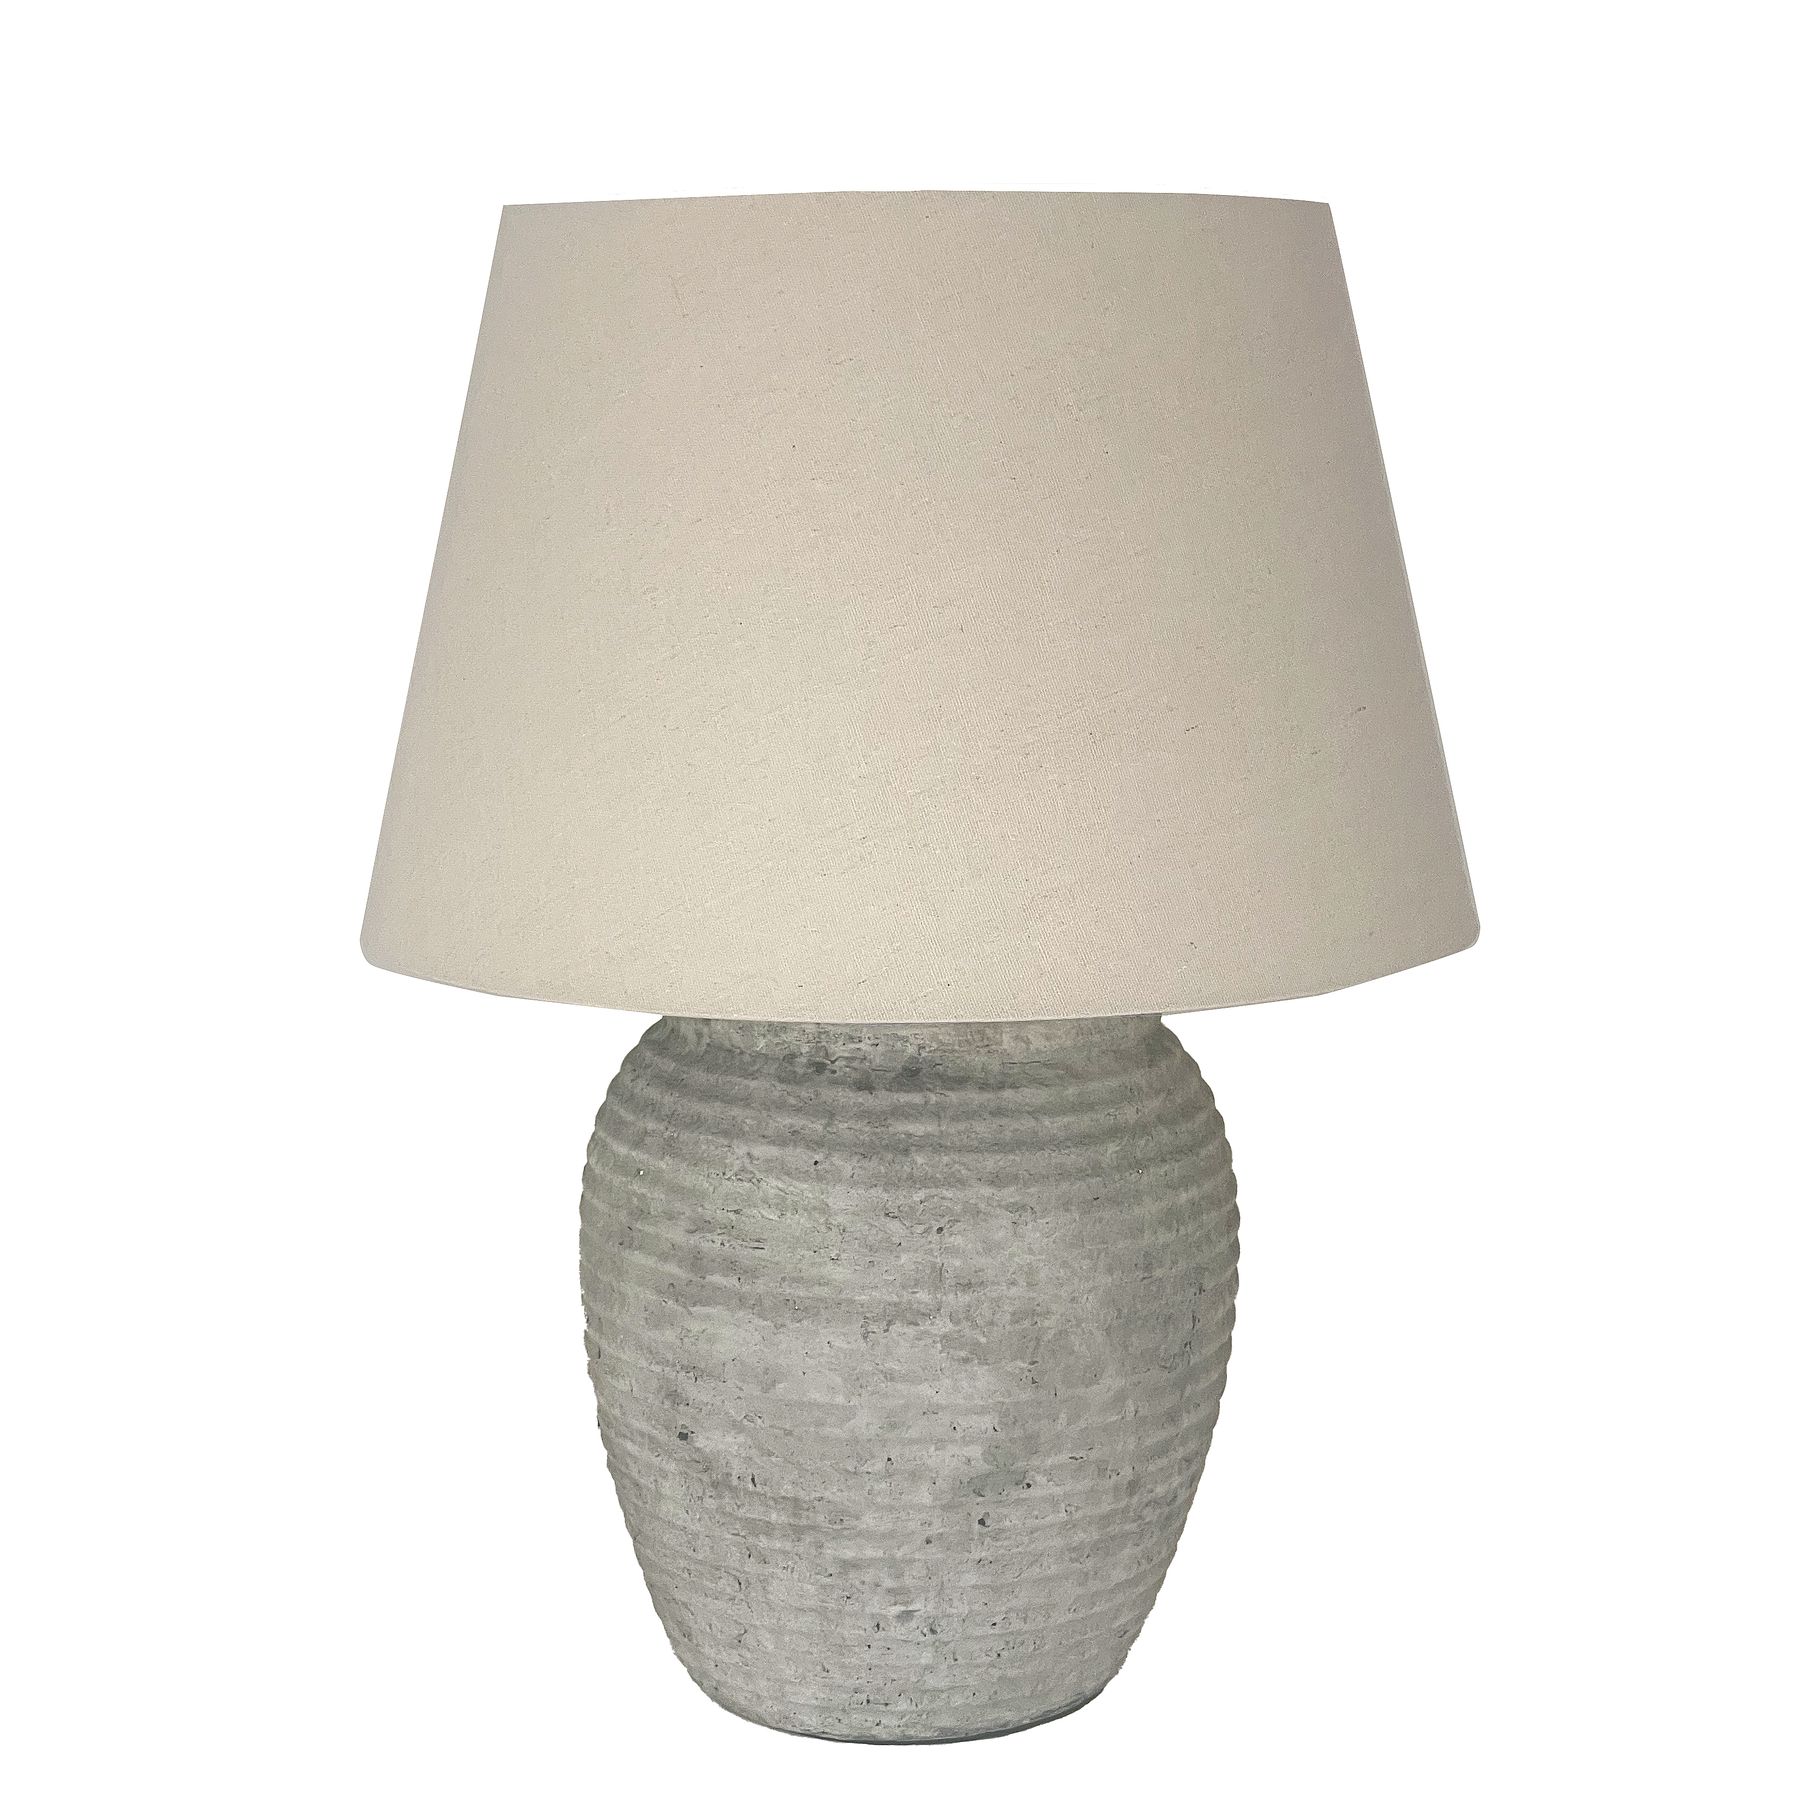 Stone Capri lamp - Image 1